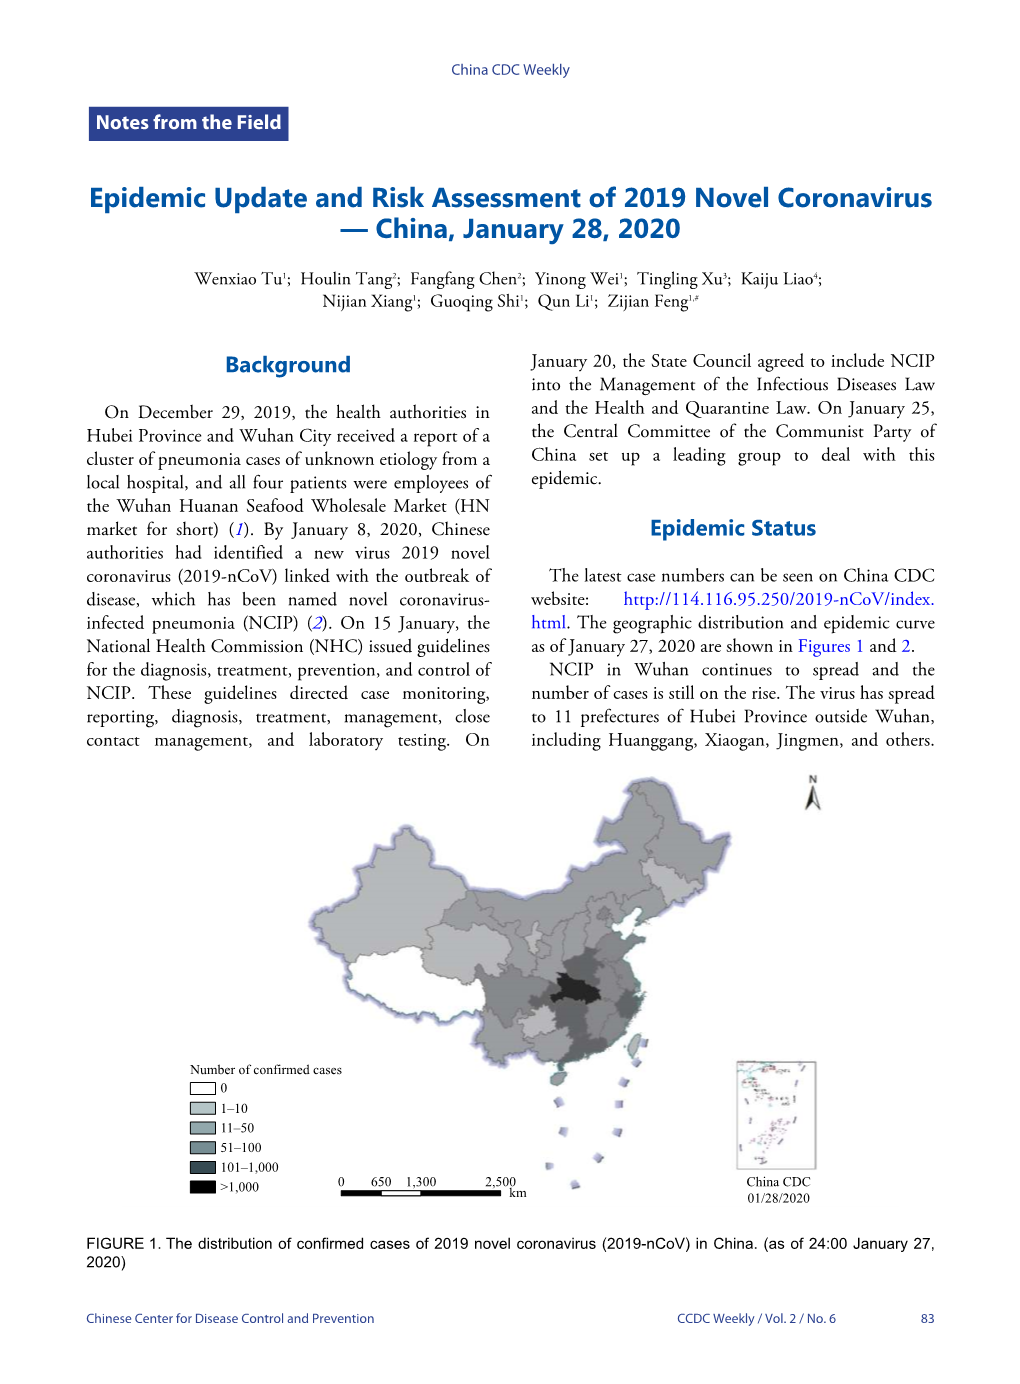 Epidemic Update and Risk Assessment of 2019 Novel Coronavirus — China, January 28, 2020